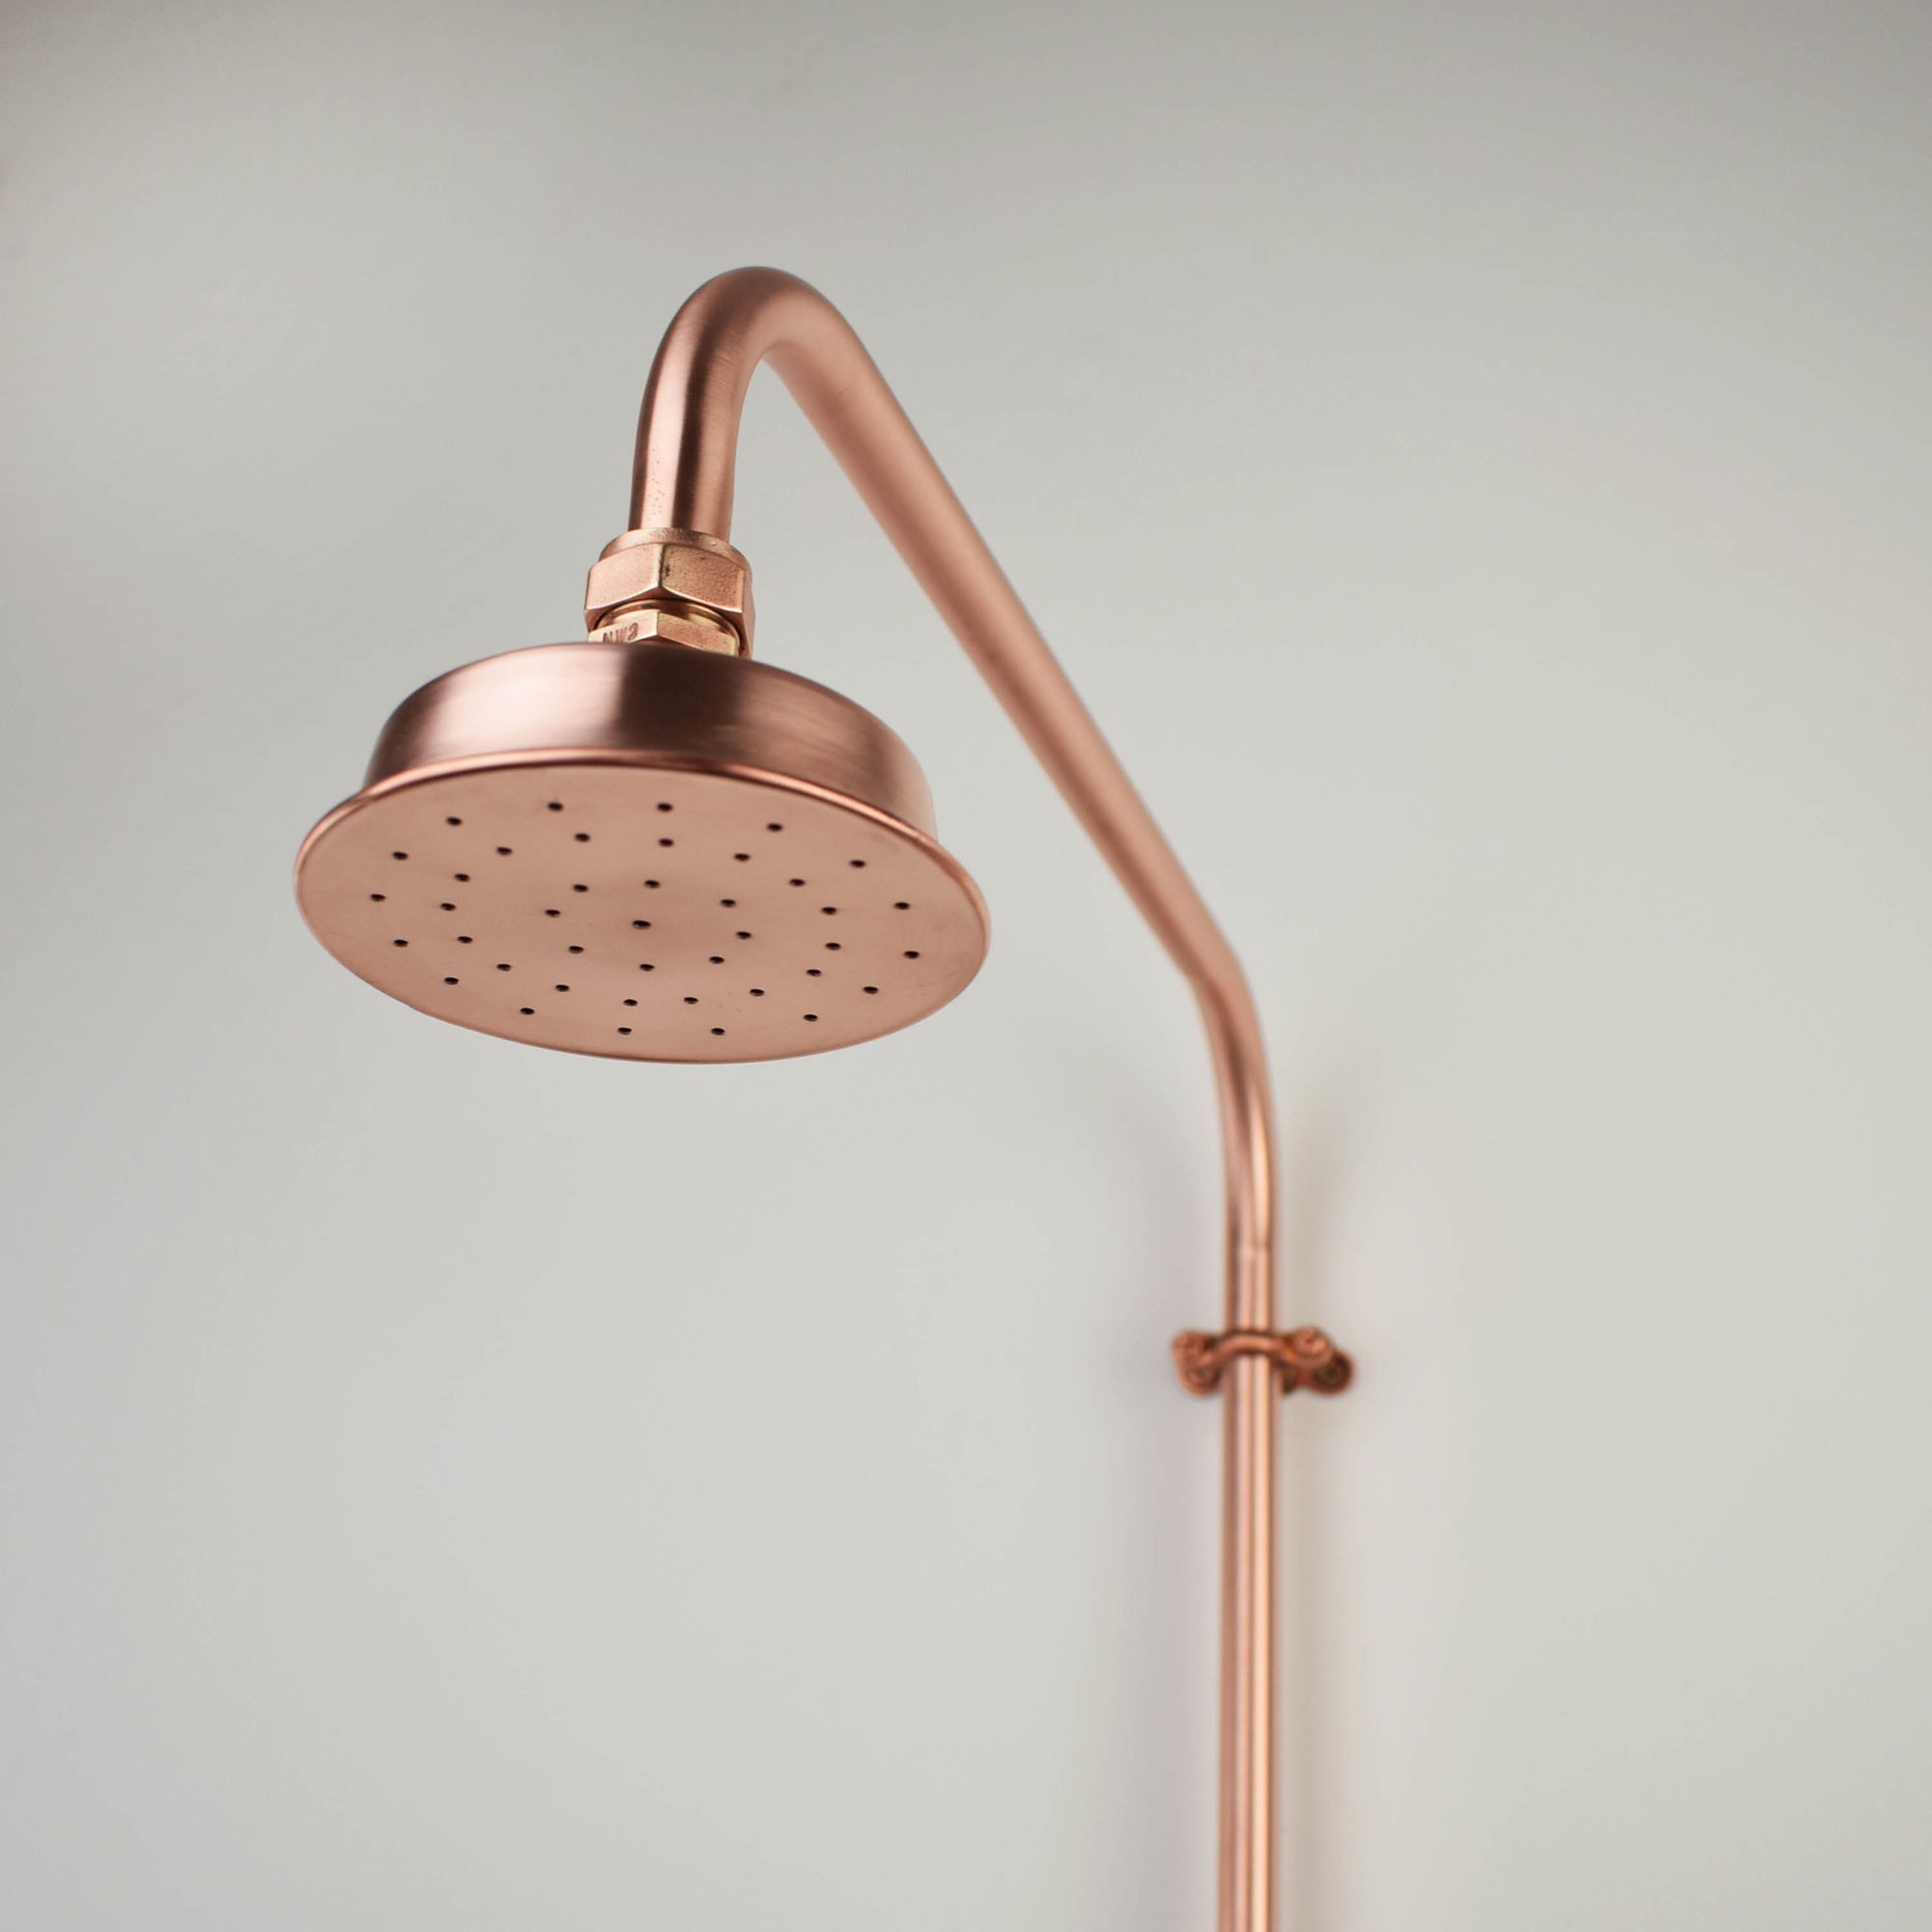 Copper Shower Head - Small Shower Rose - Proper Copper Design